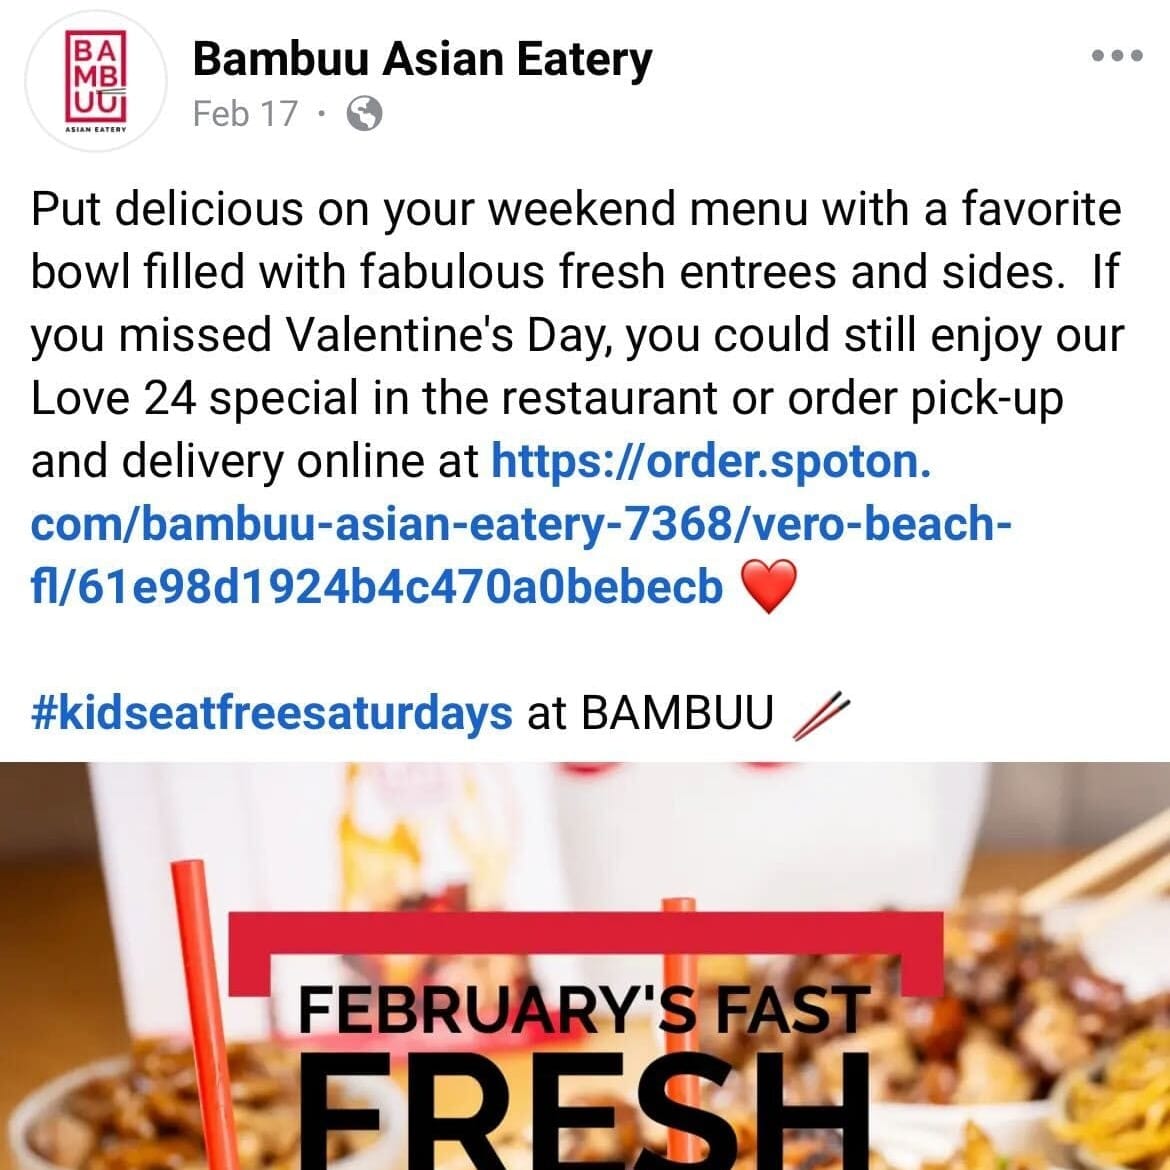 Bambuu Asian Eatery posts restaurant ads on Facebook.